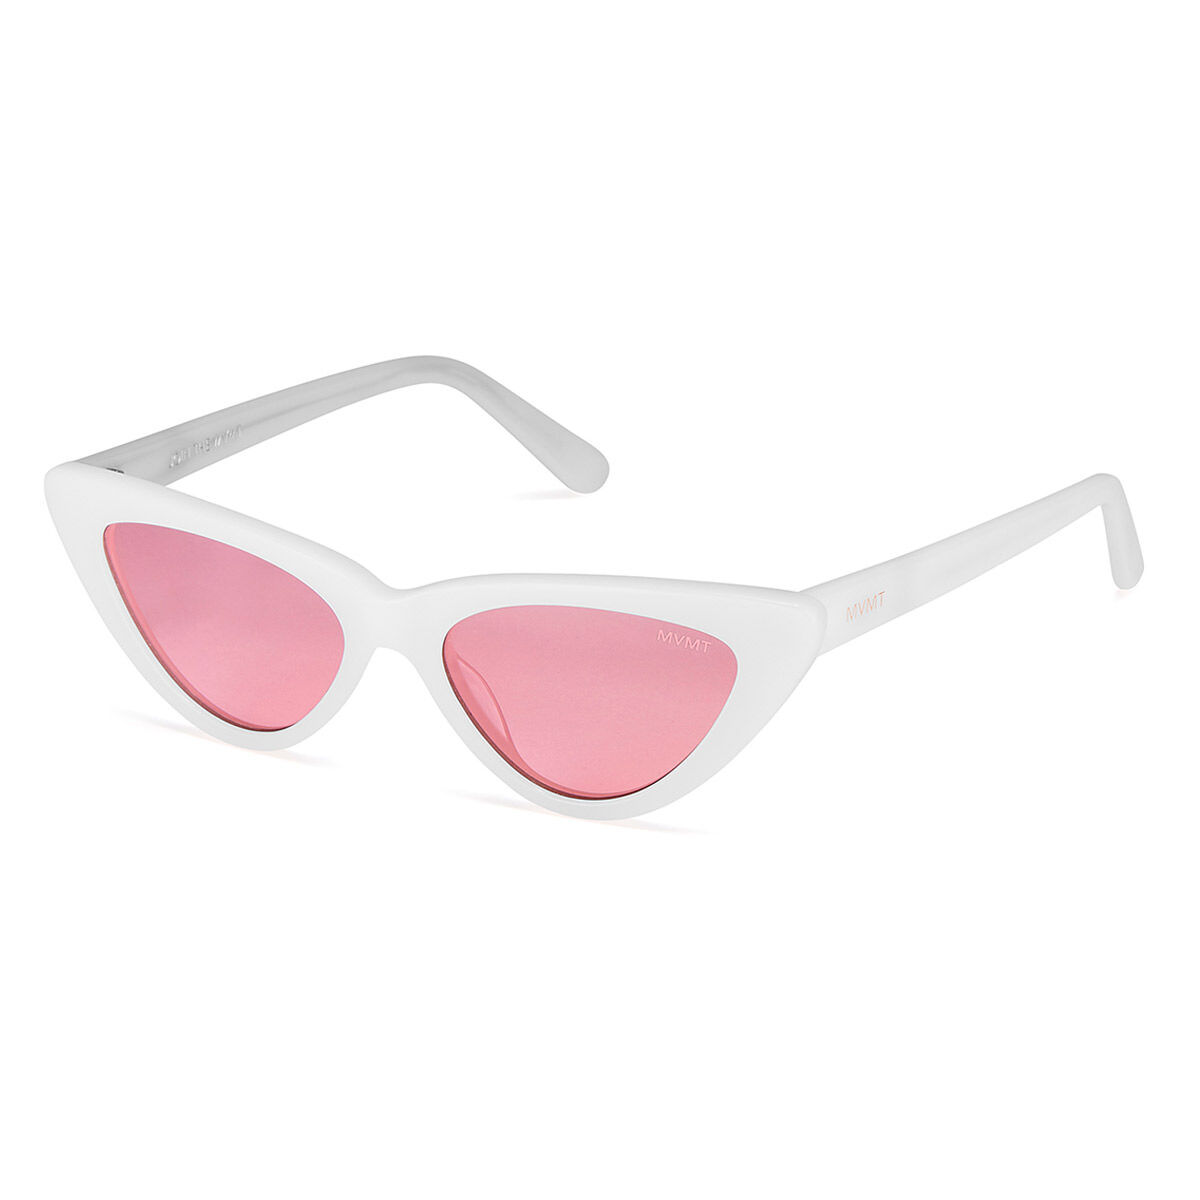 Boolavard Vintage Oval Sunglasses Women Cateye Mod Style Plastic Frame